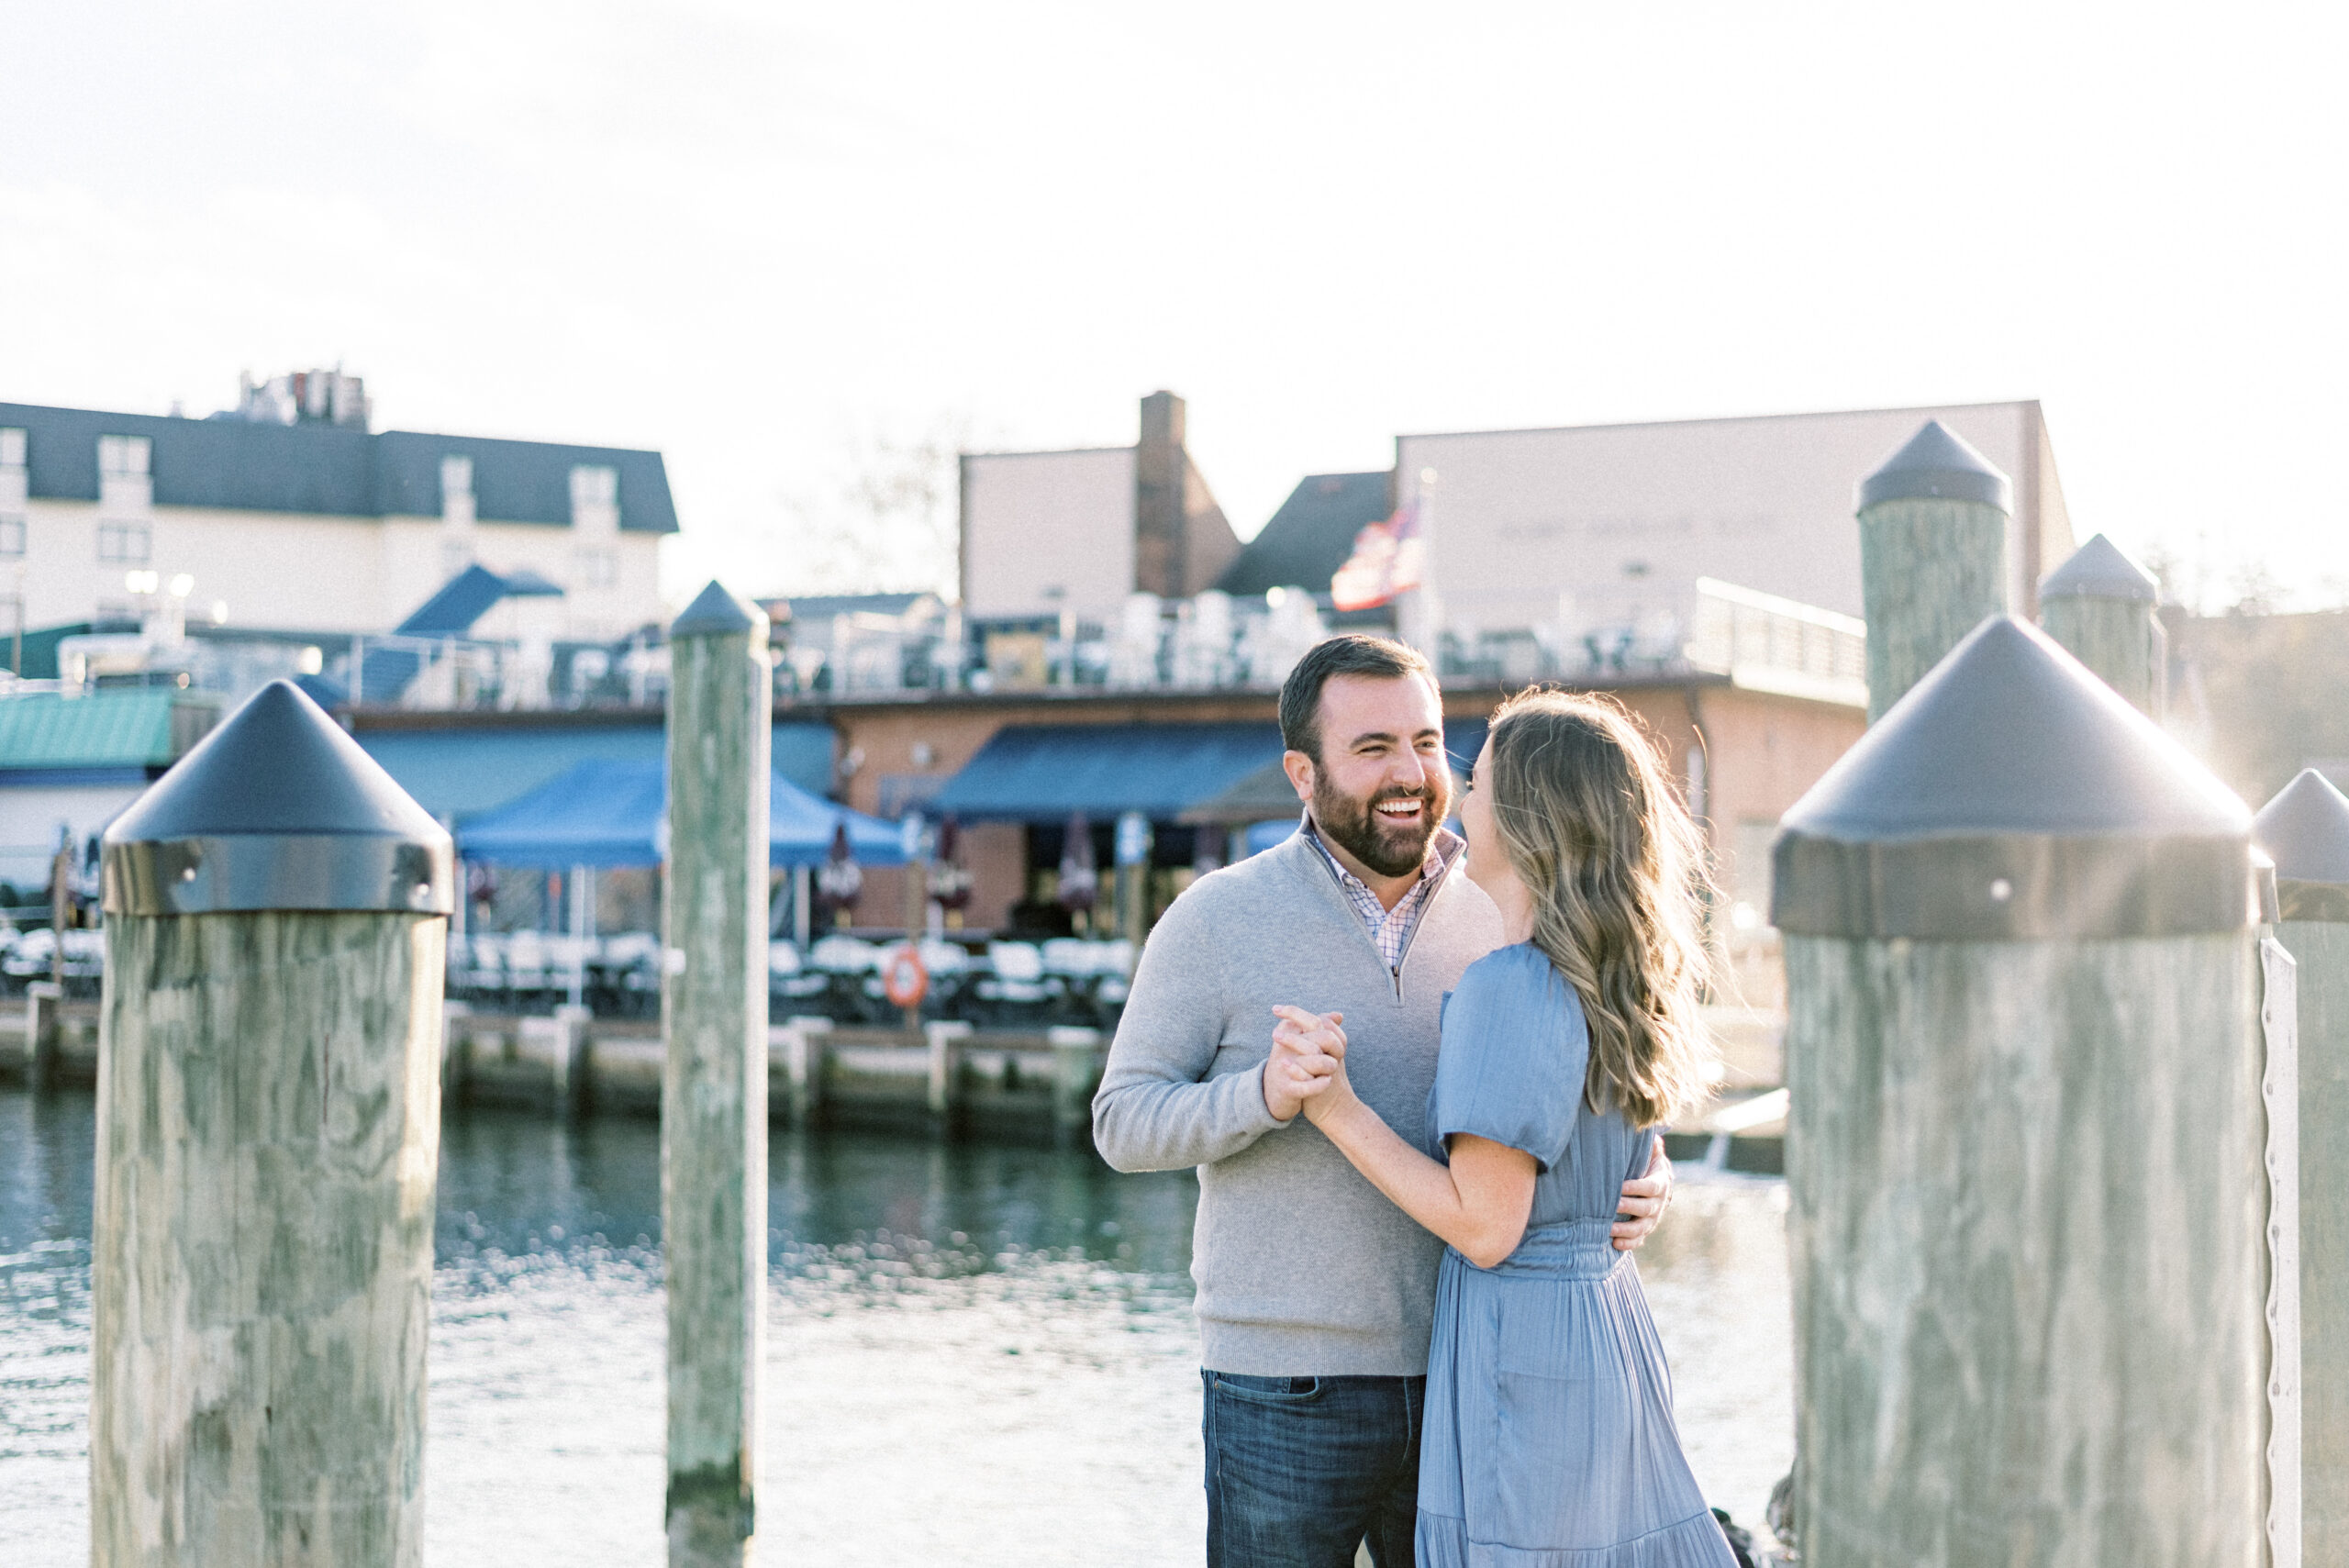 Maryland wedding photographer captures couple holding hands on dock